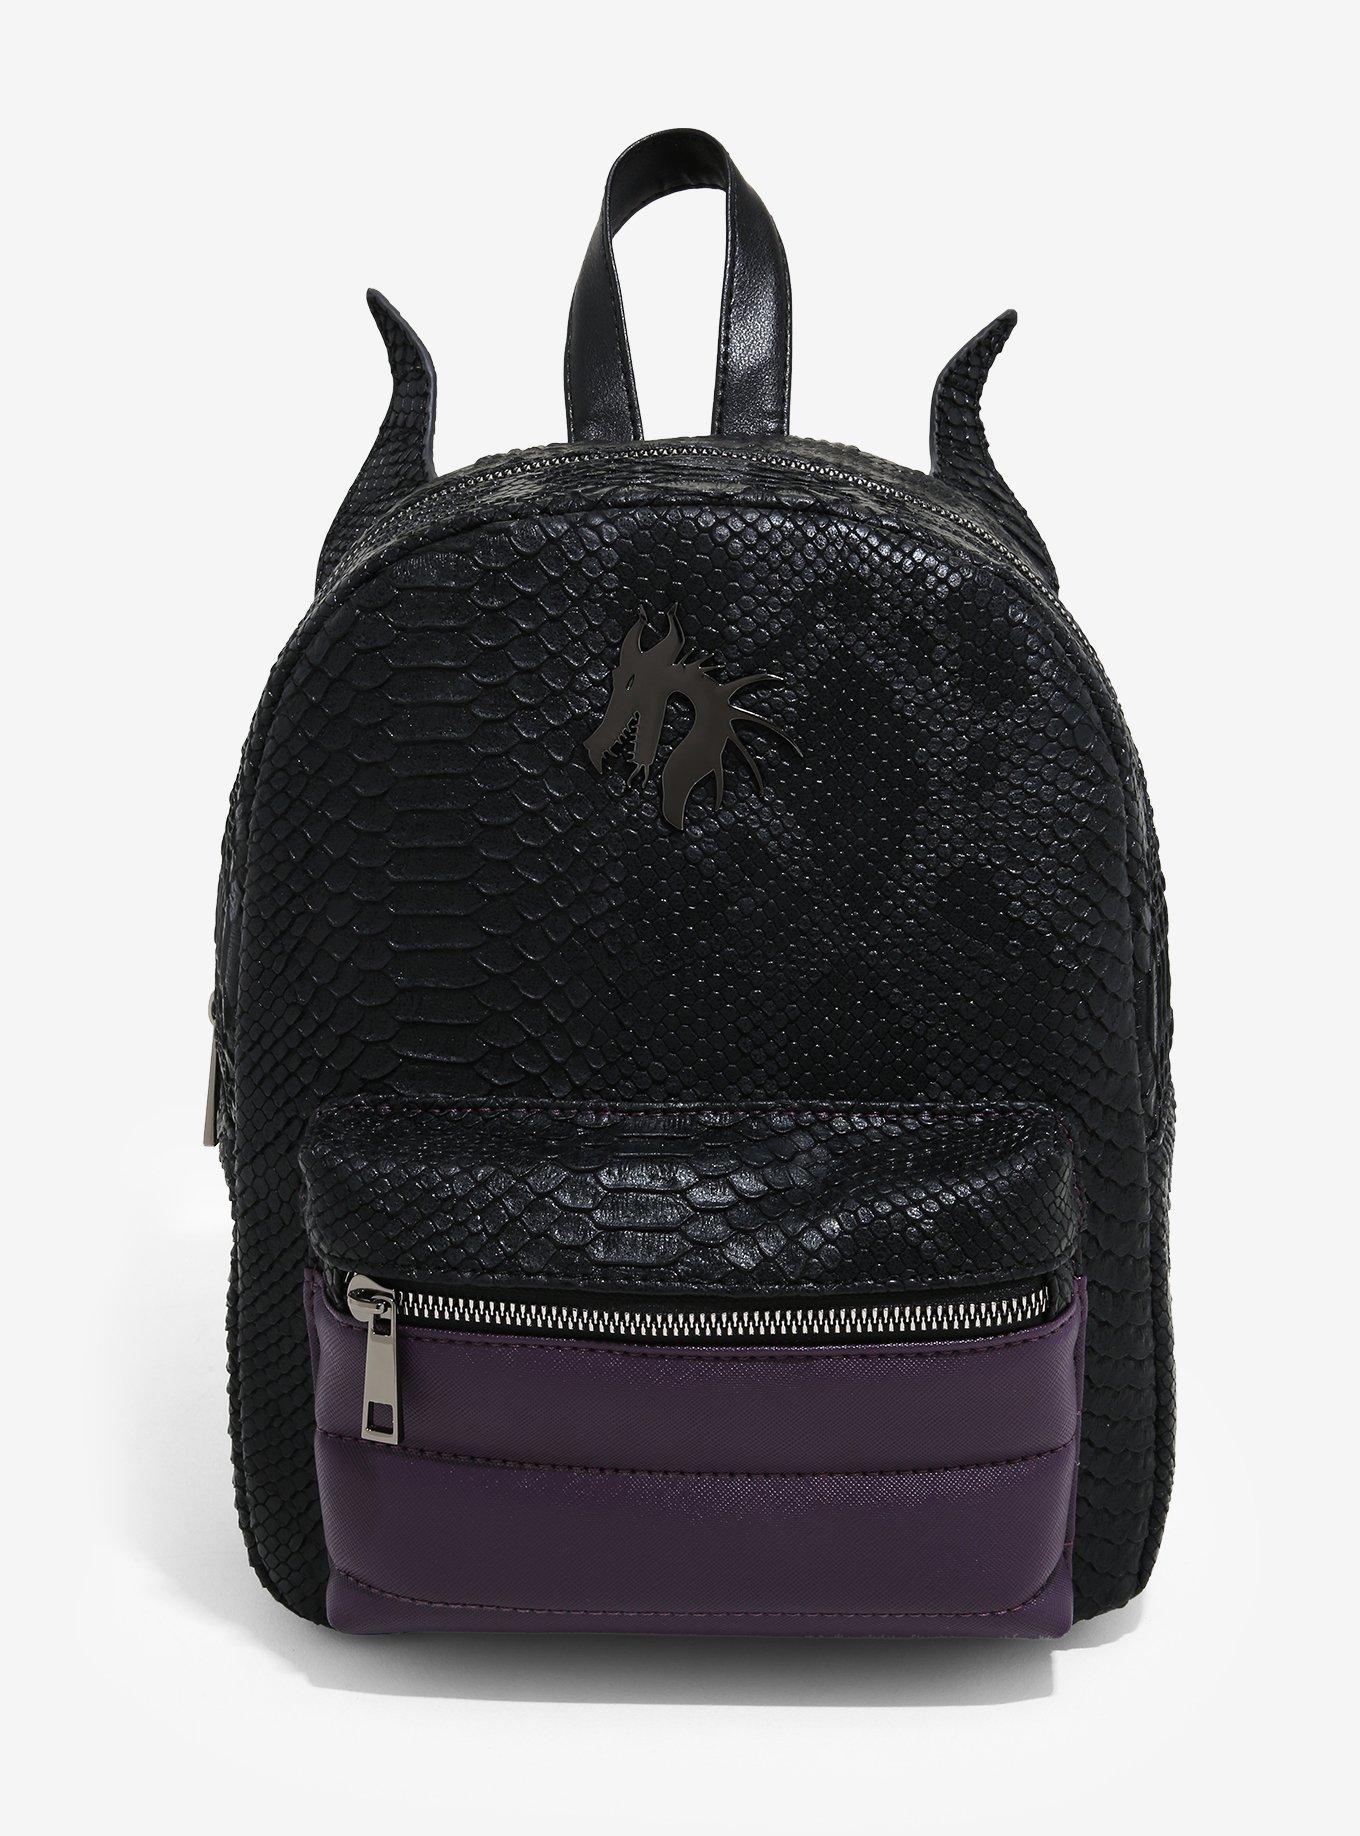 Wondapop Luxe - Disney Black Light Series Villains Maleficent Mini Backpack - Limited Edition